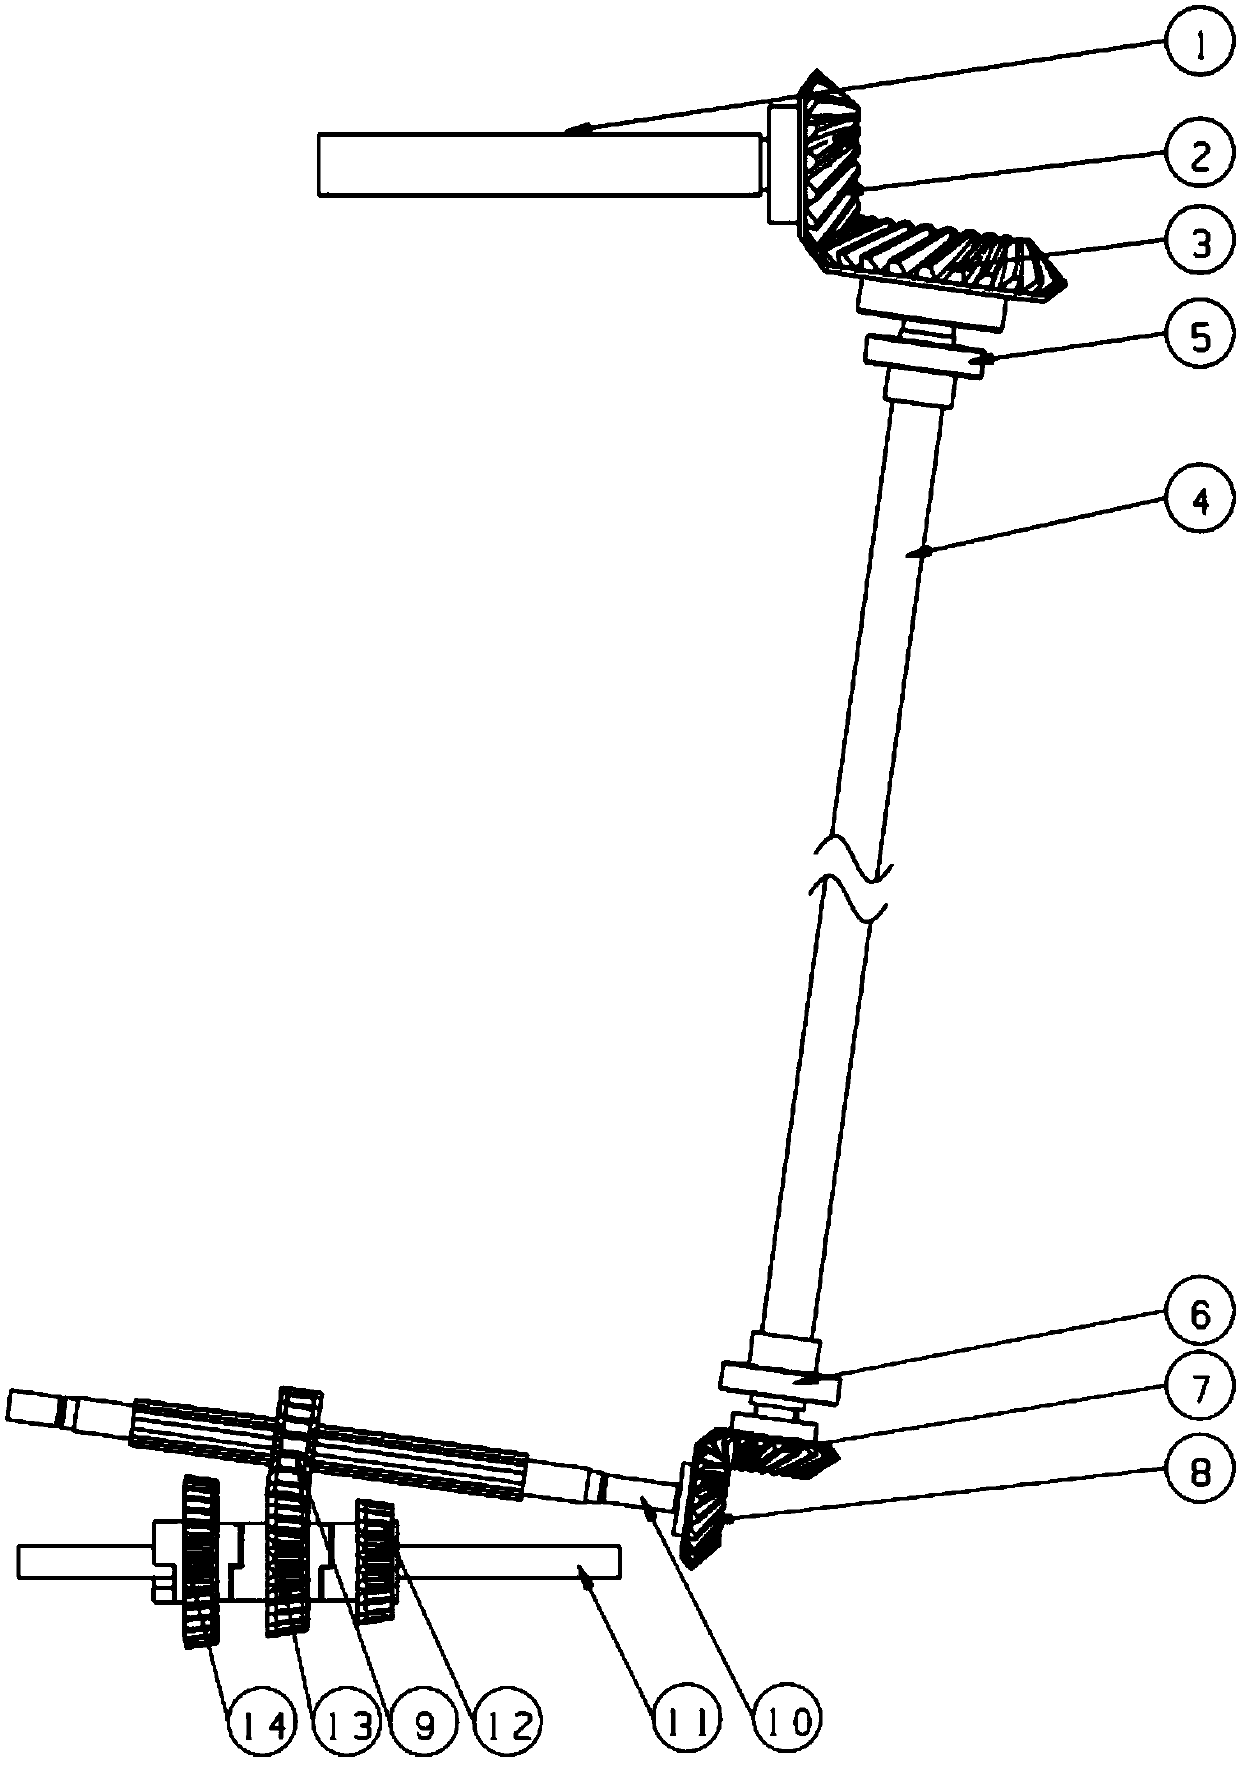 Bicycle shaft multi-stage transmission internal speed variator